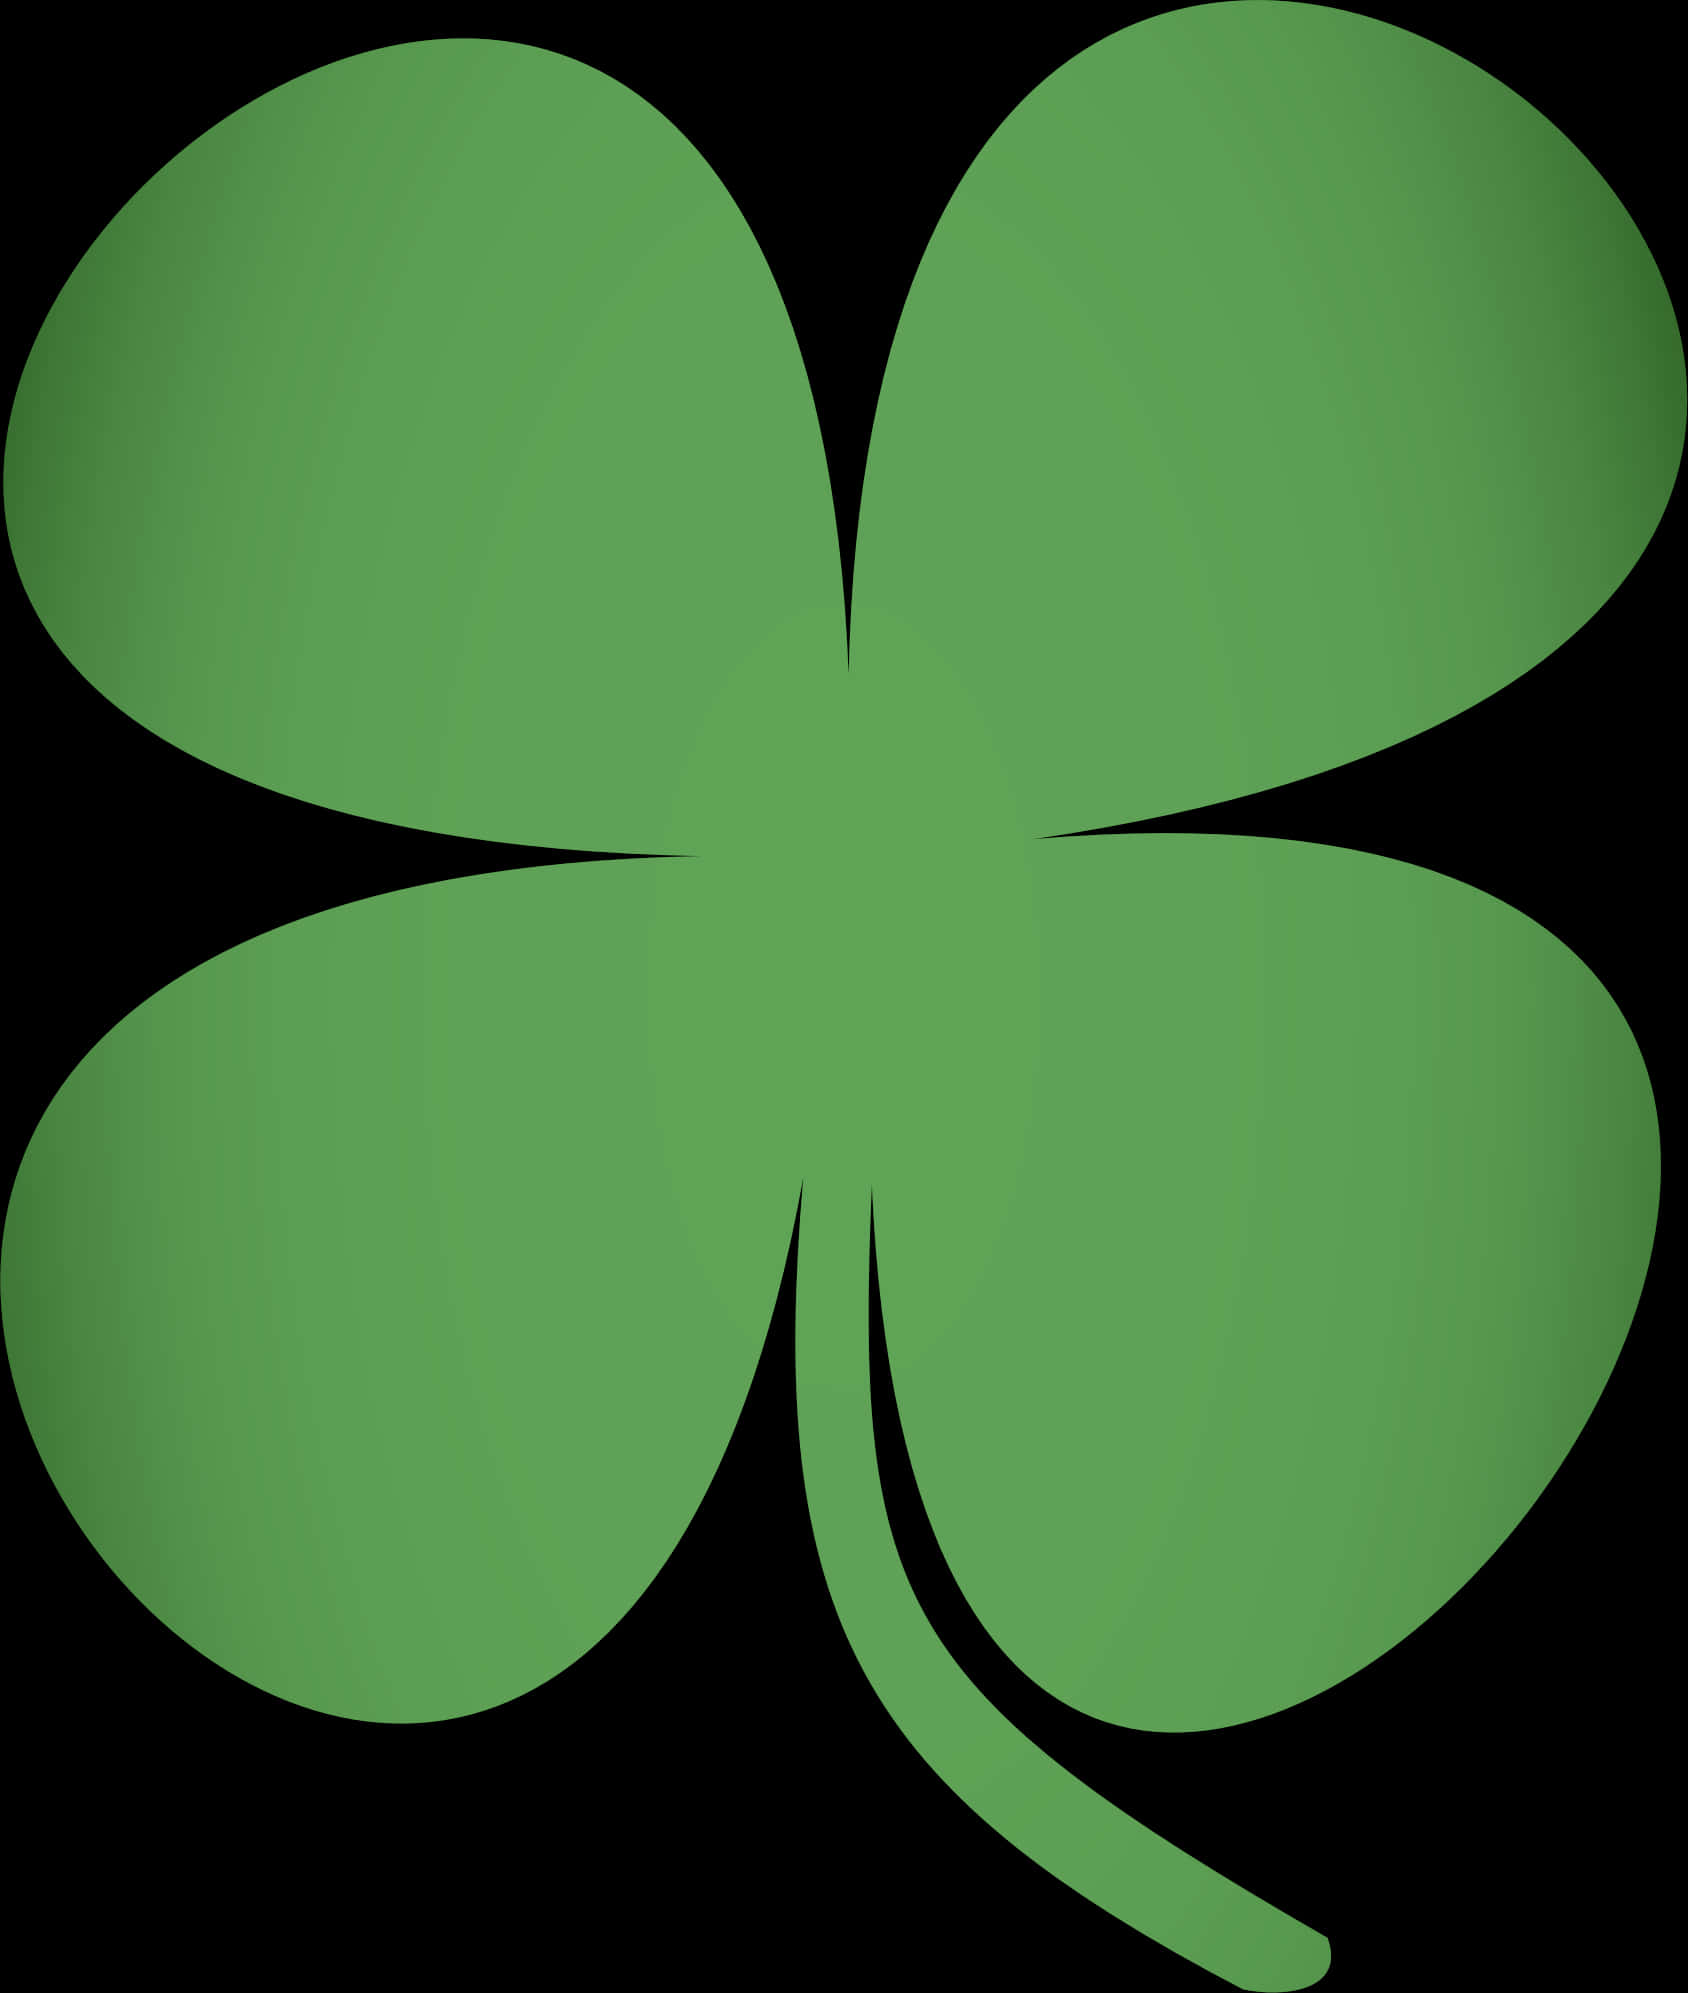 A Green Clover Leaf On A Black Background